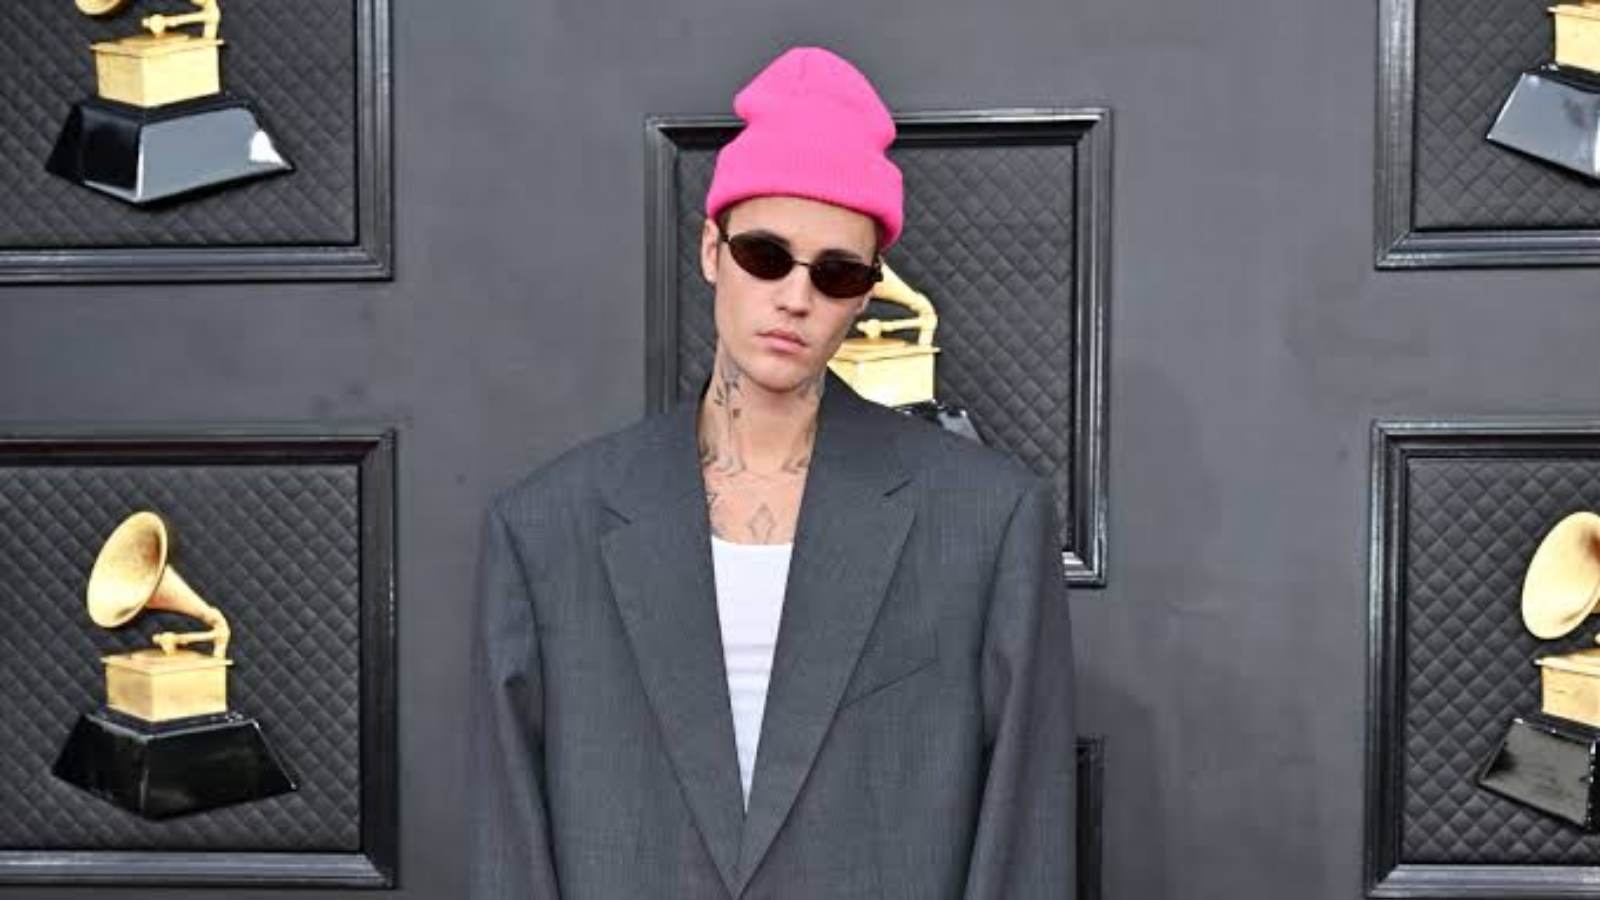 Justin Bieber at the Grammys red carpet